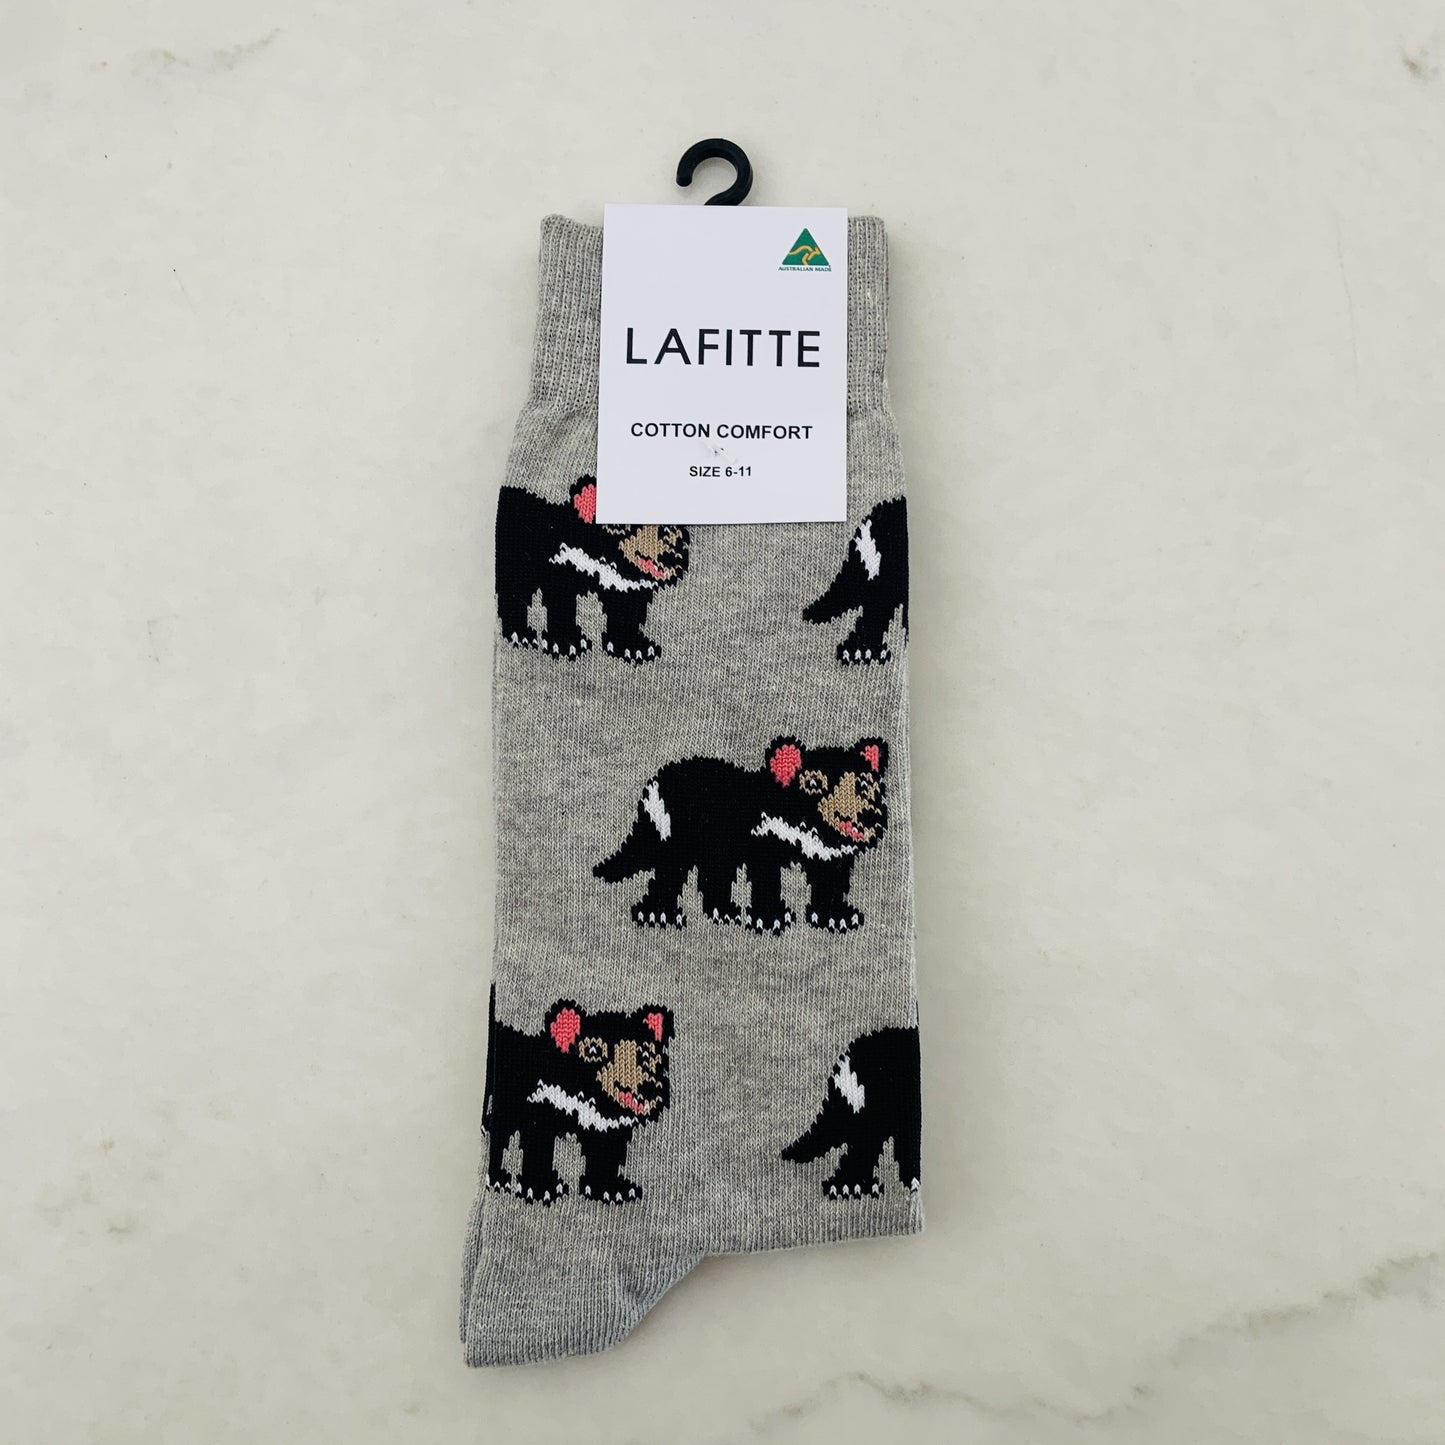 Tasmanian Devil Grey Socks